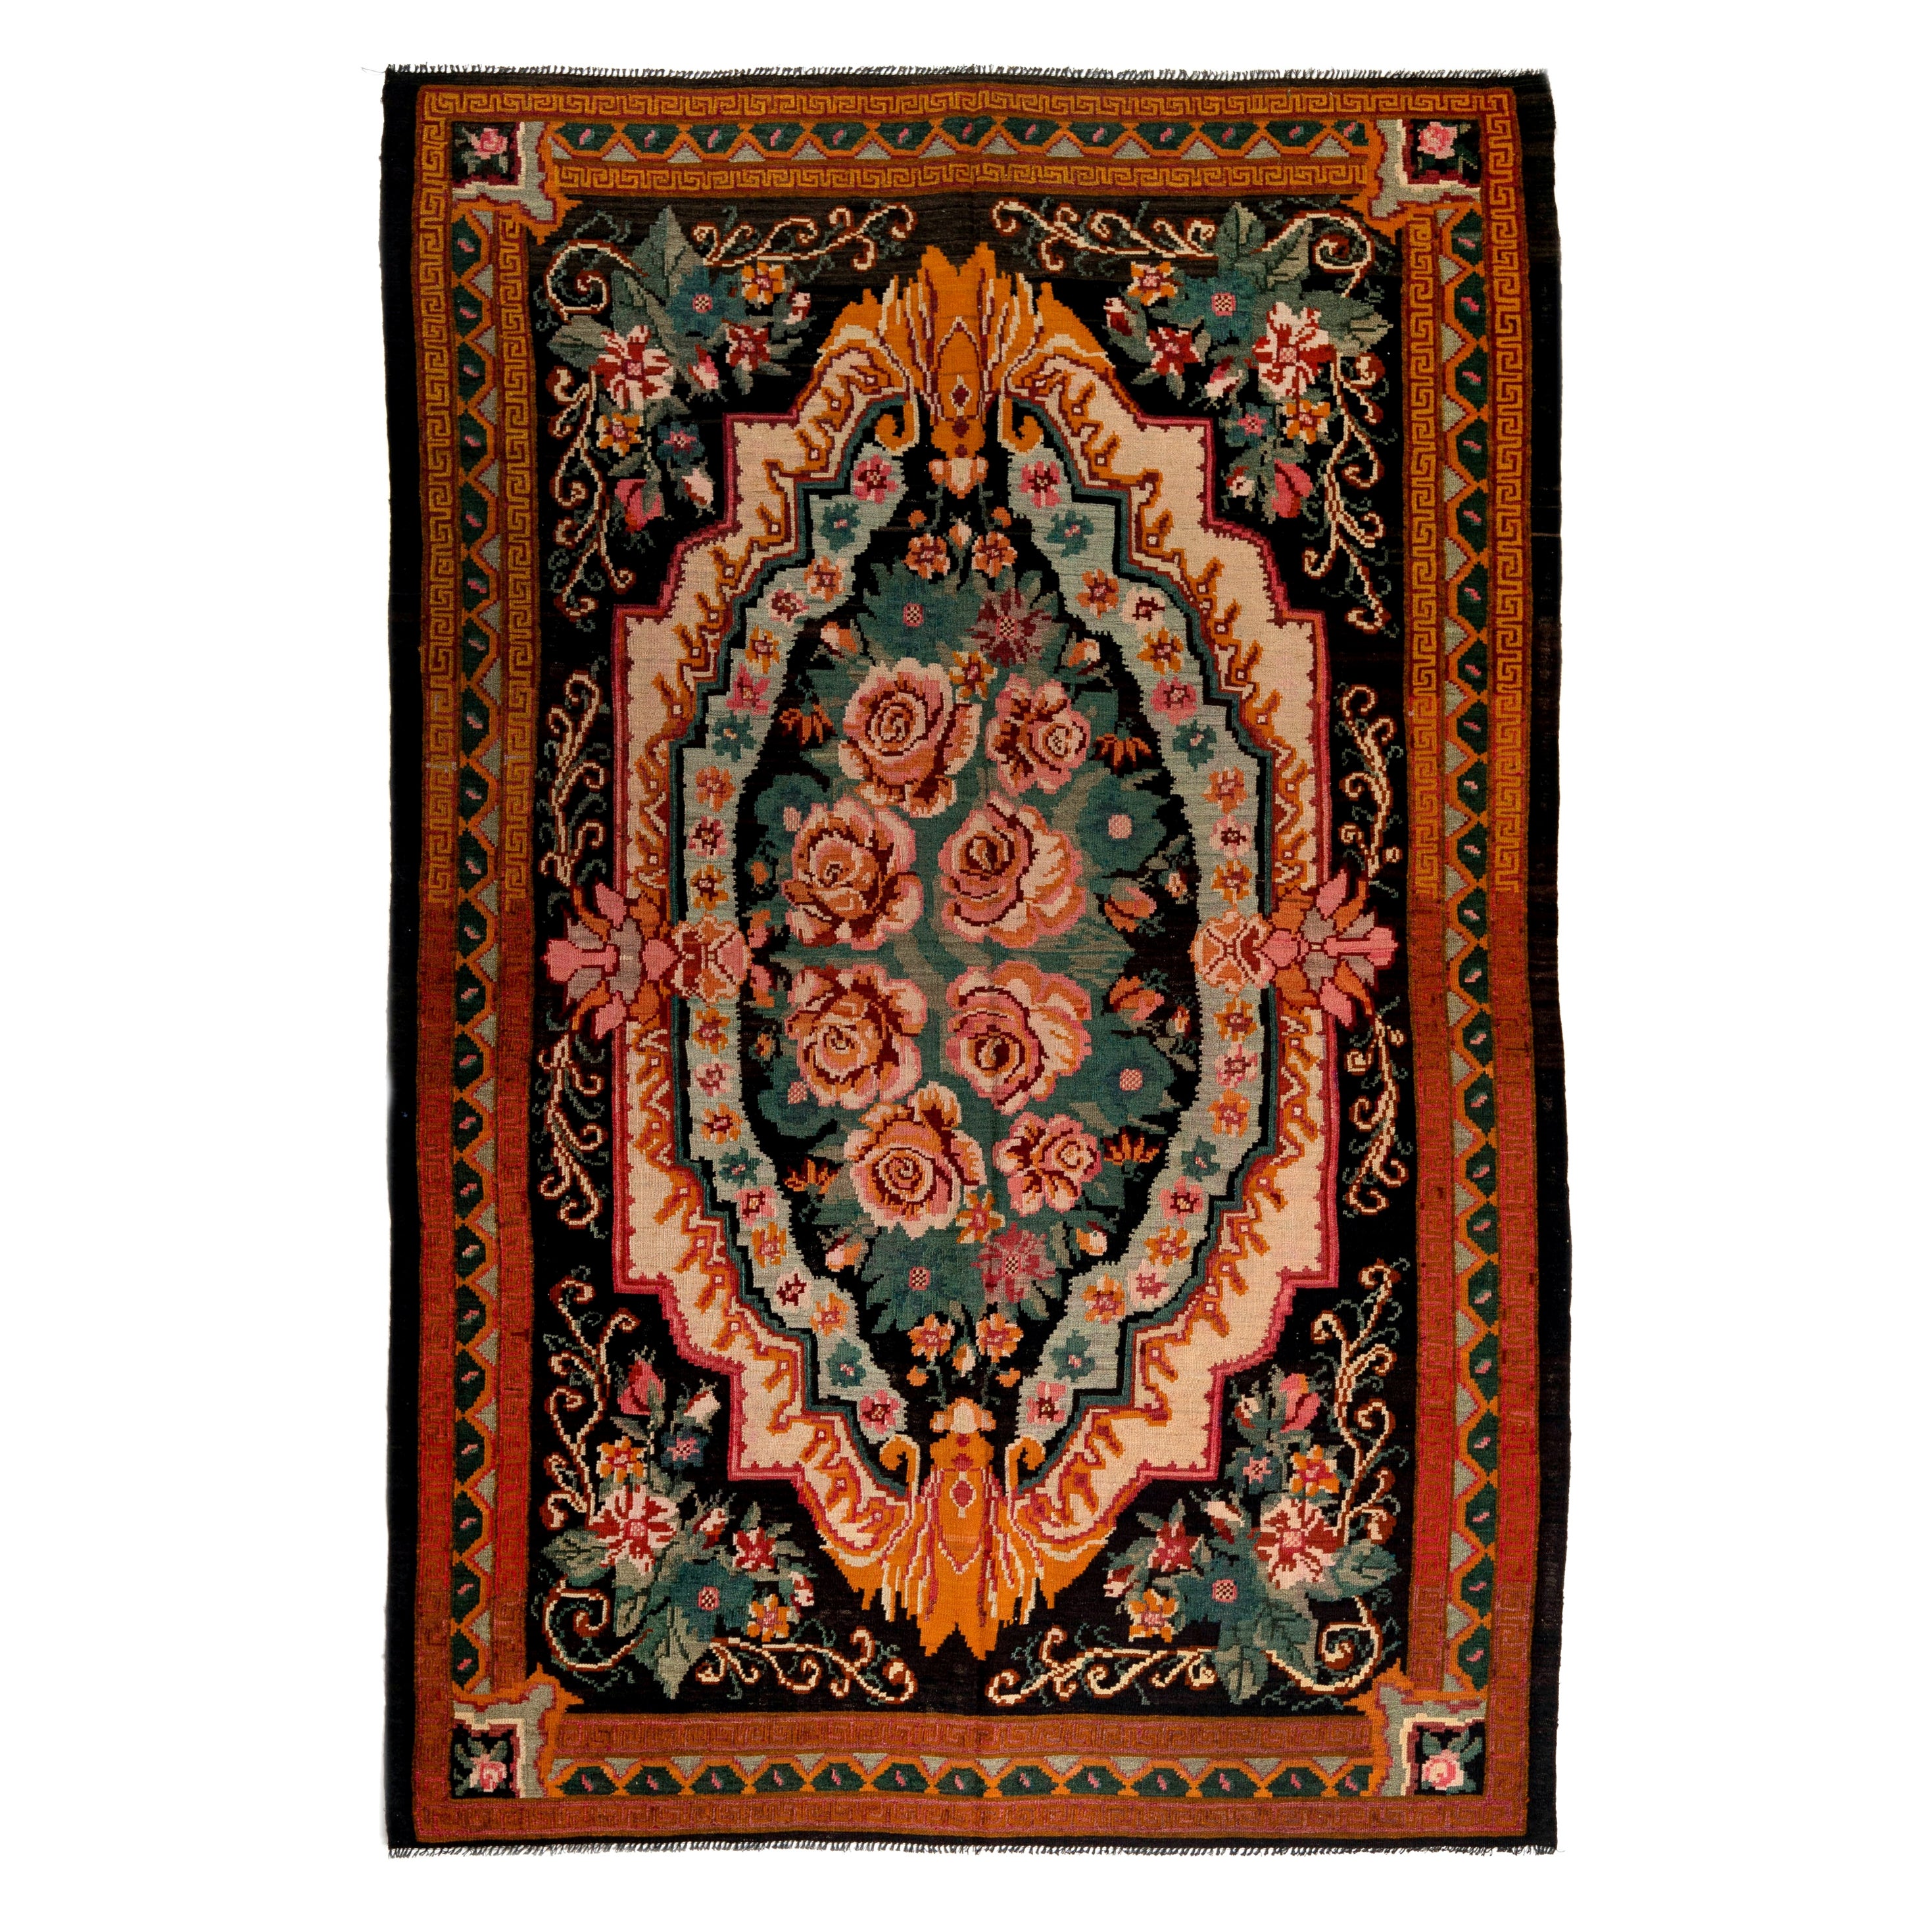 6.9x10.2 Ft Vintage Bessarabian Kilim, Floral Handwoven Wool Rug from Moldova